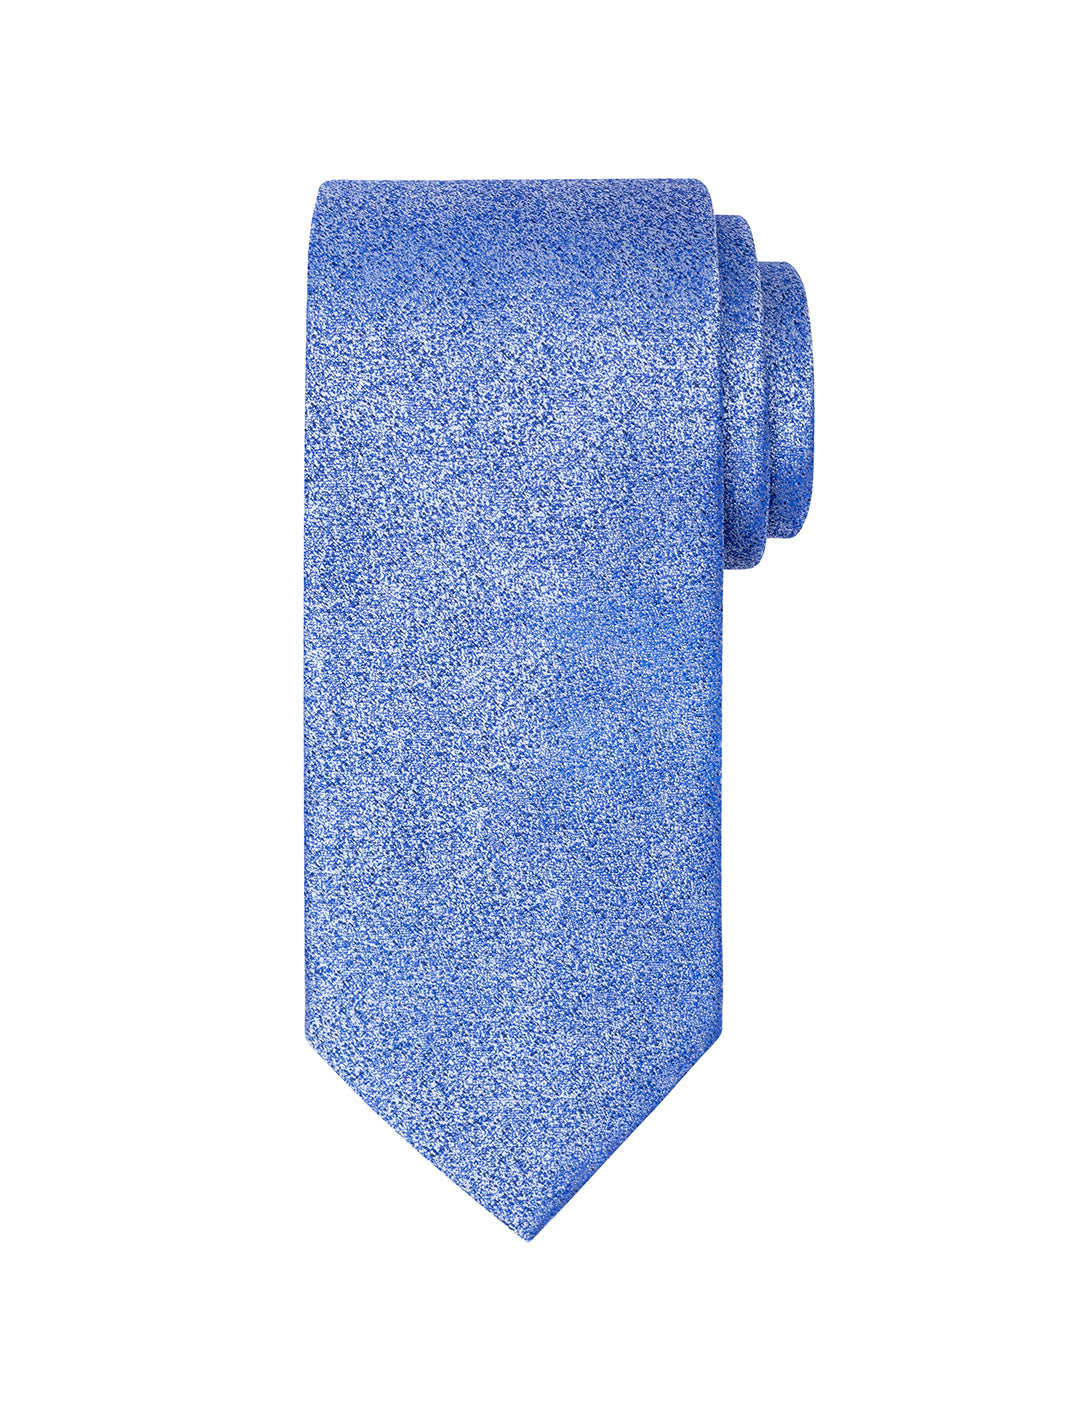 Men's Speckle Tie - Blue